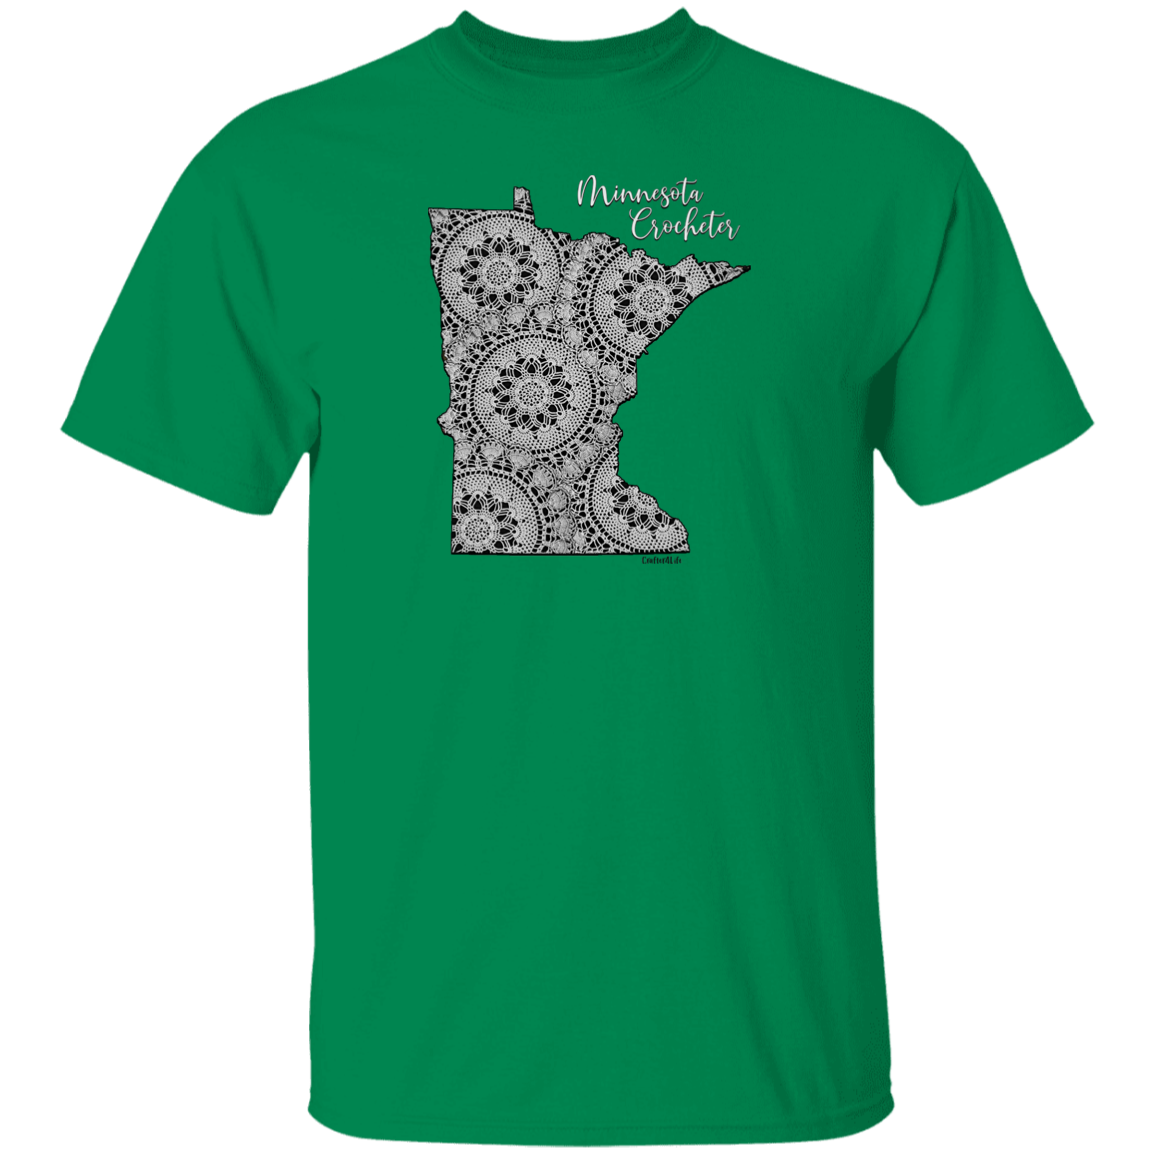 Minnesota Crocheter T-Shirt